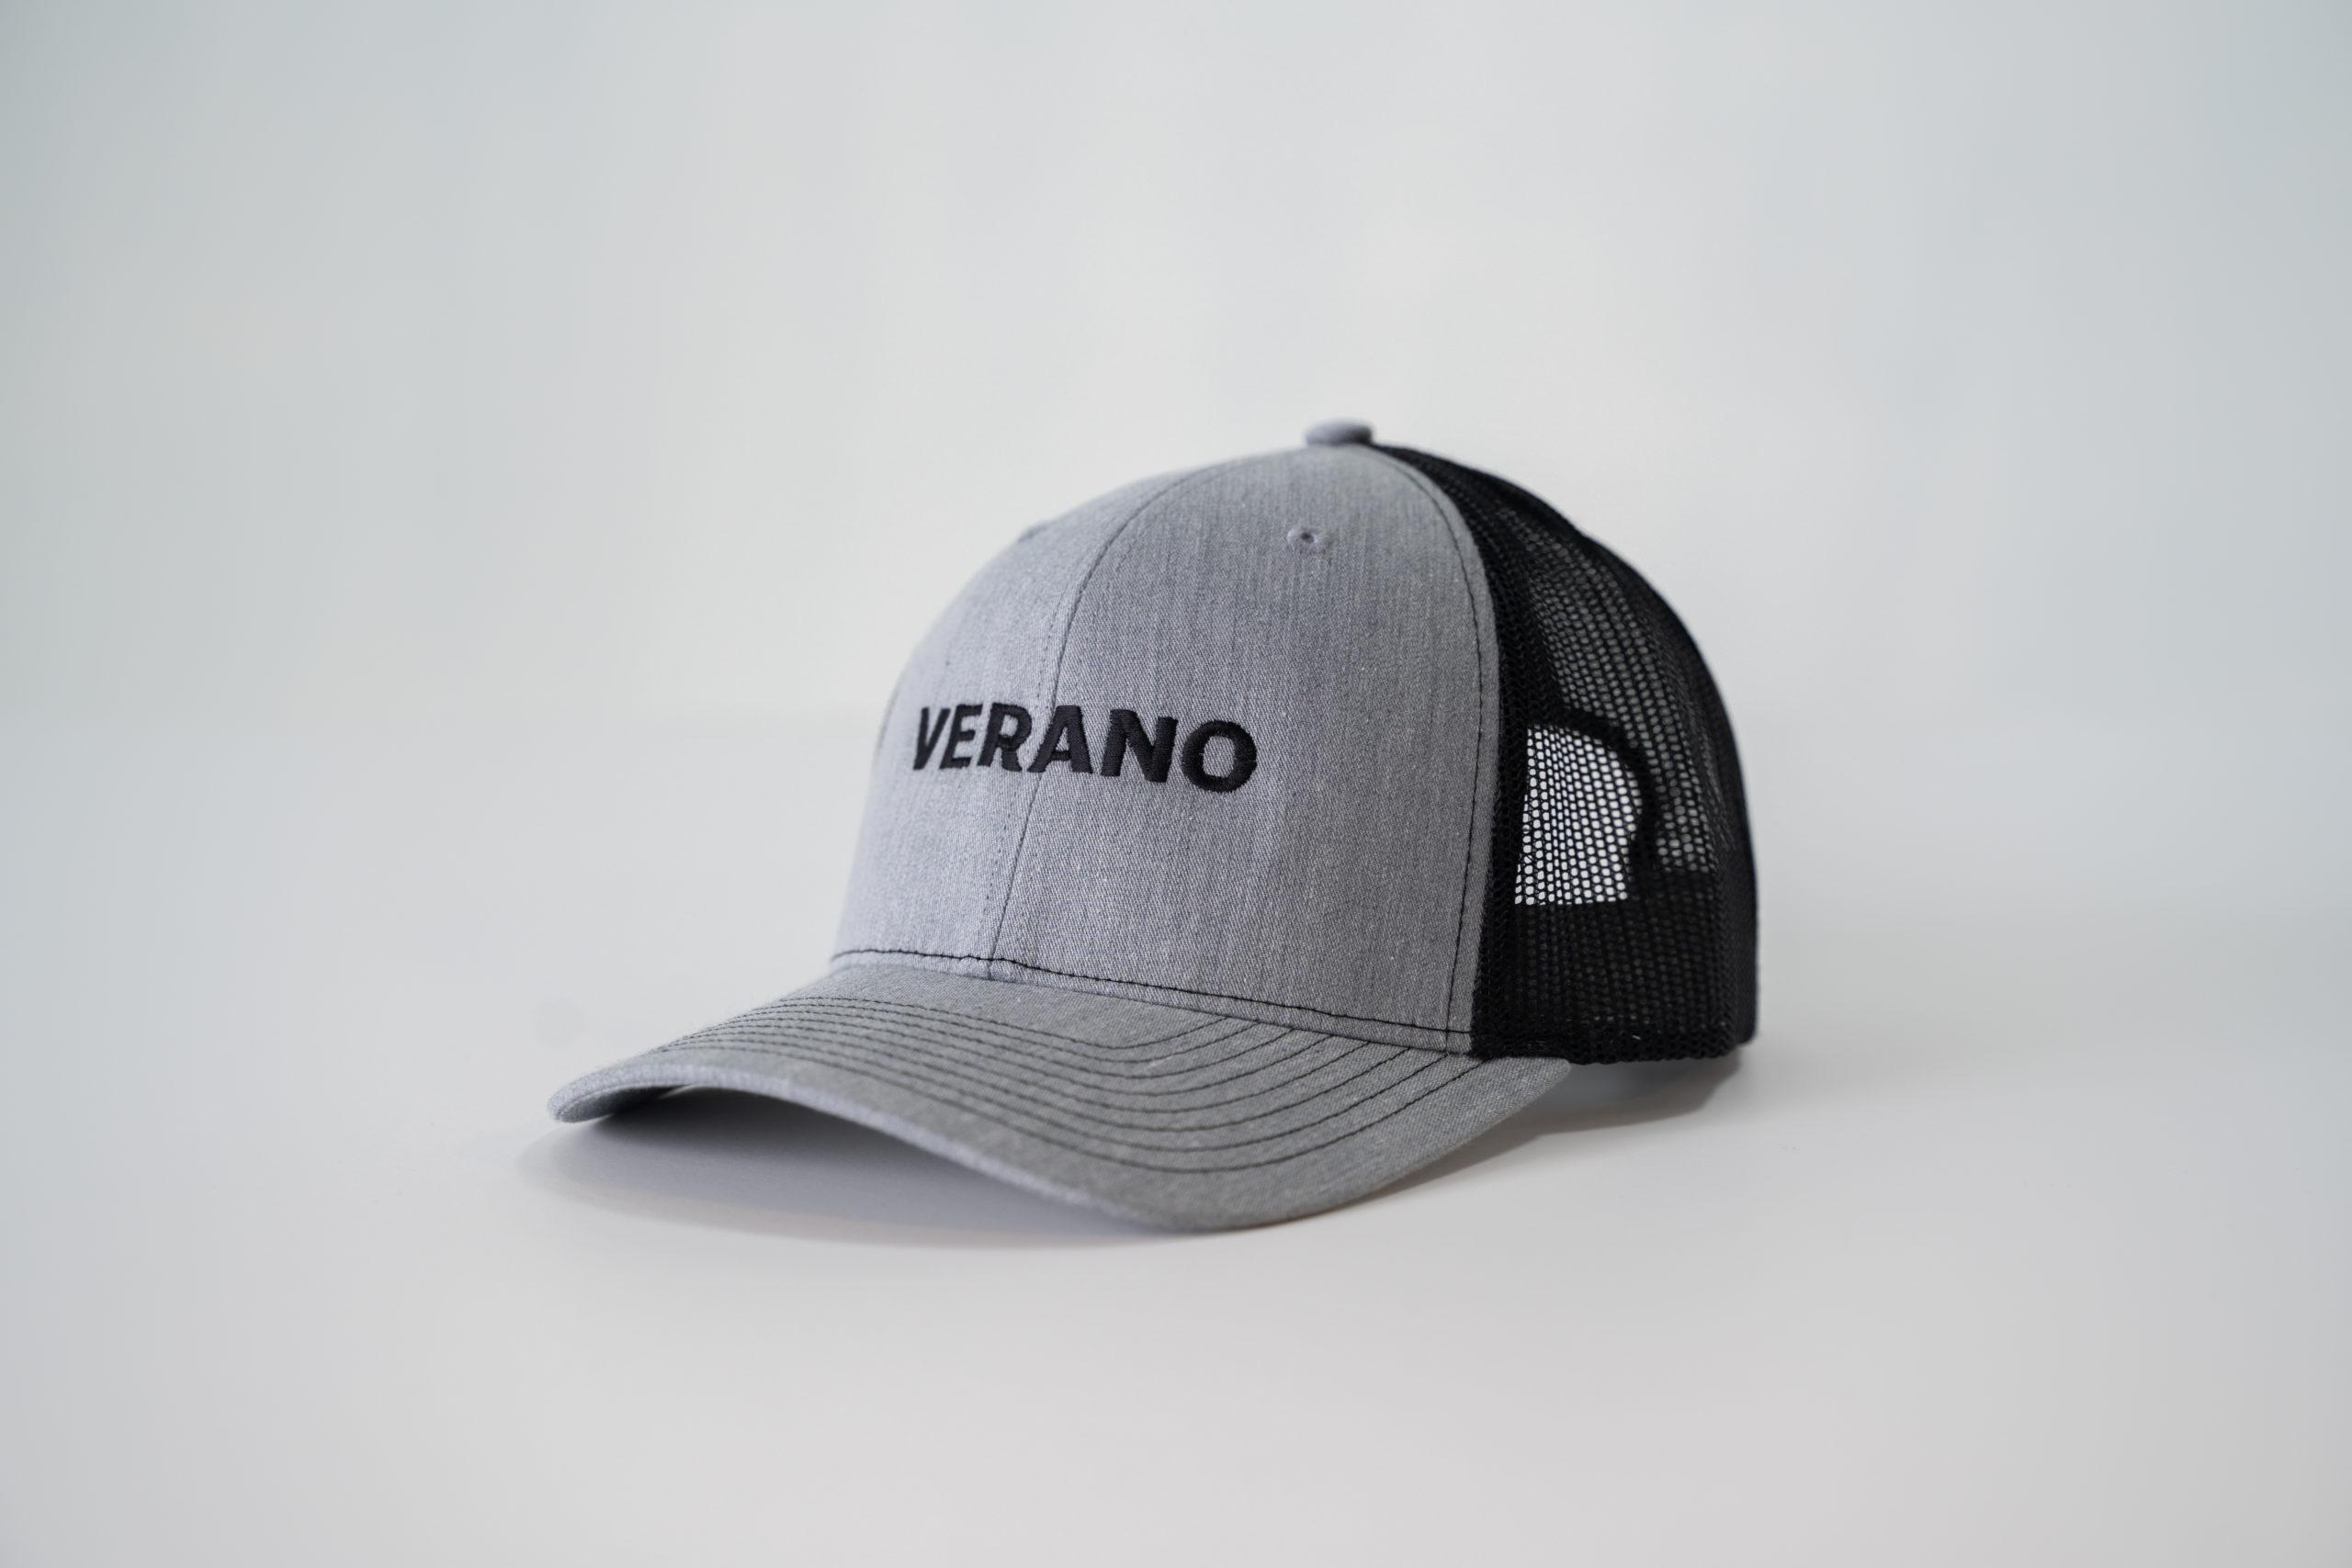 Verano Cannabis Hat - Gray and Black